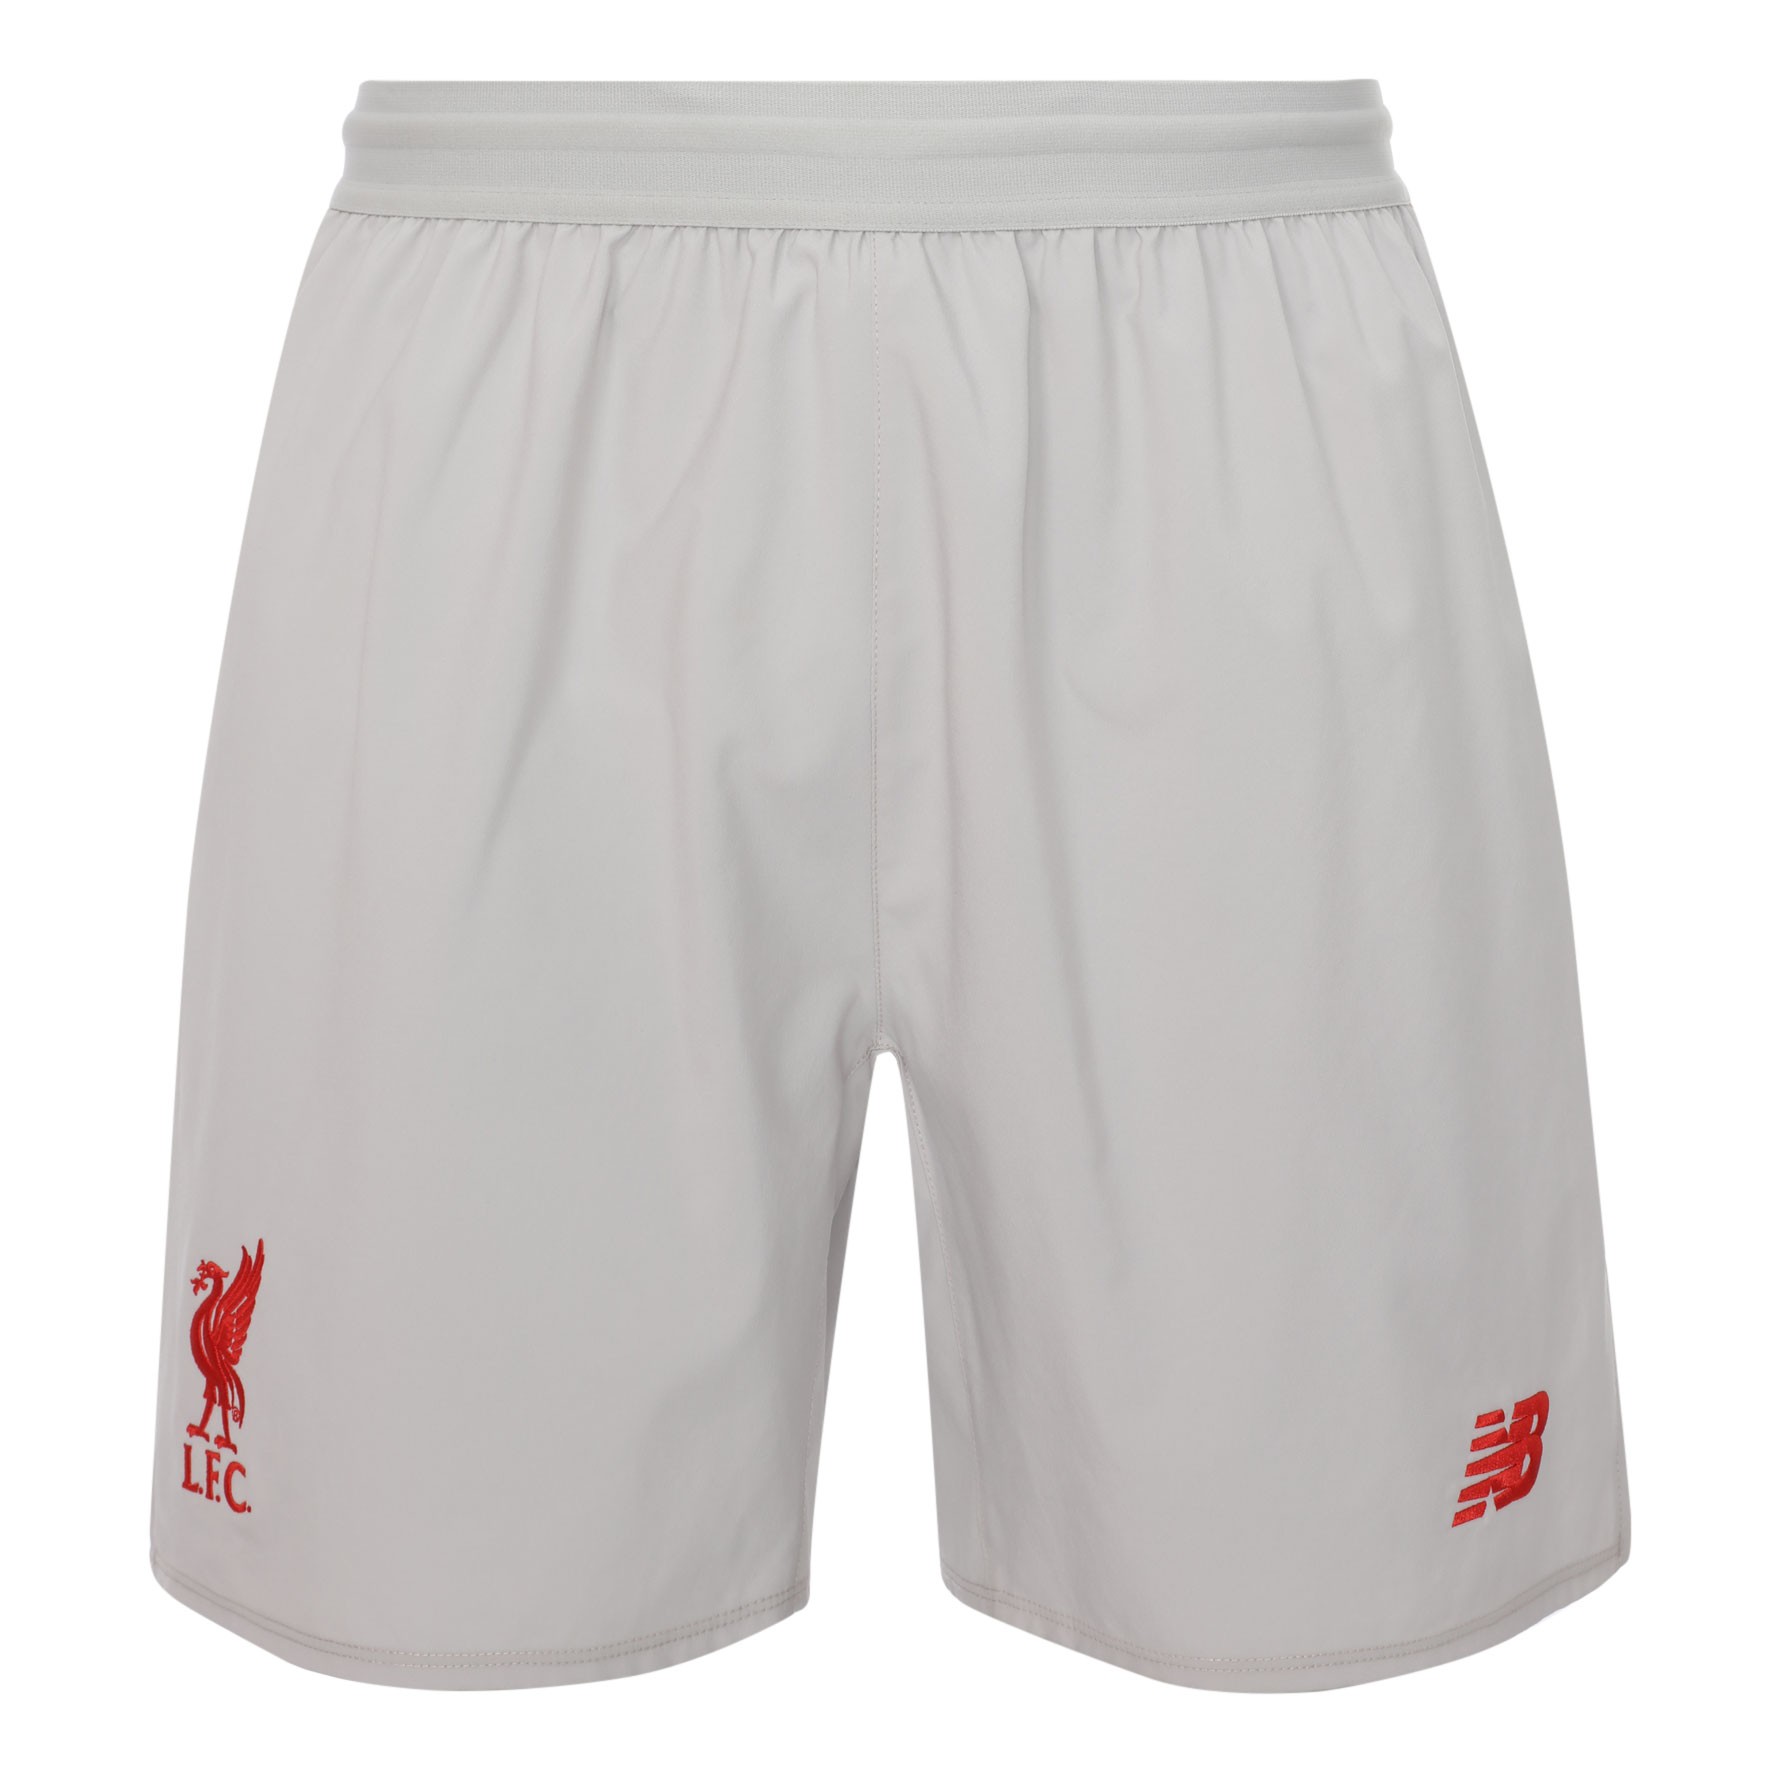 LFC Mens Third Shorts 18/19